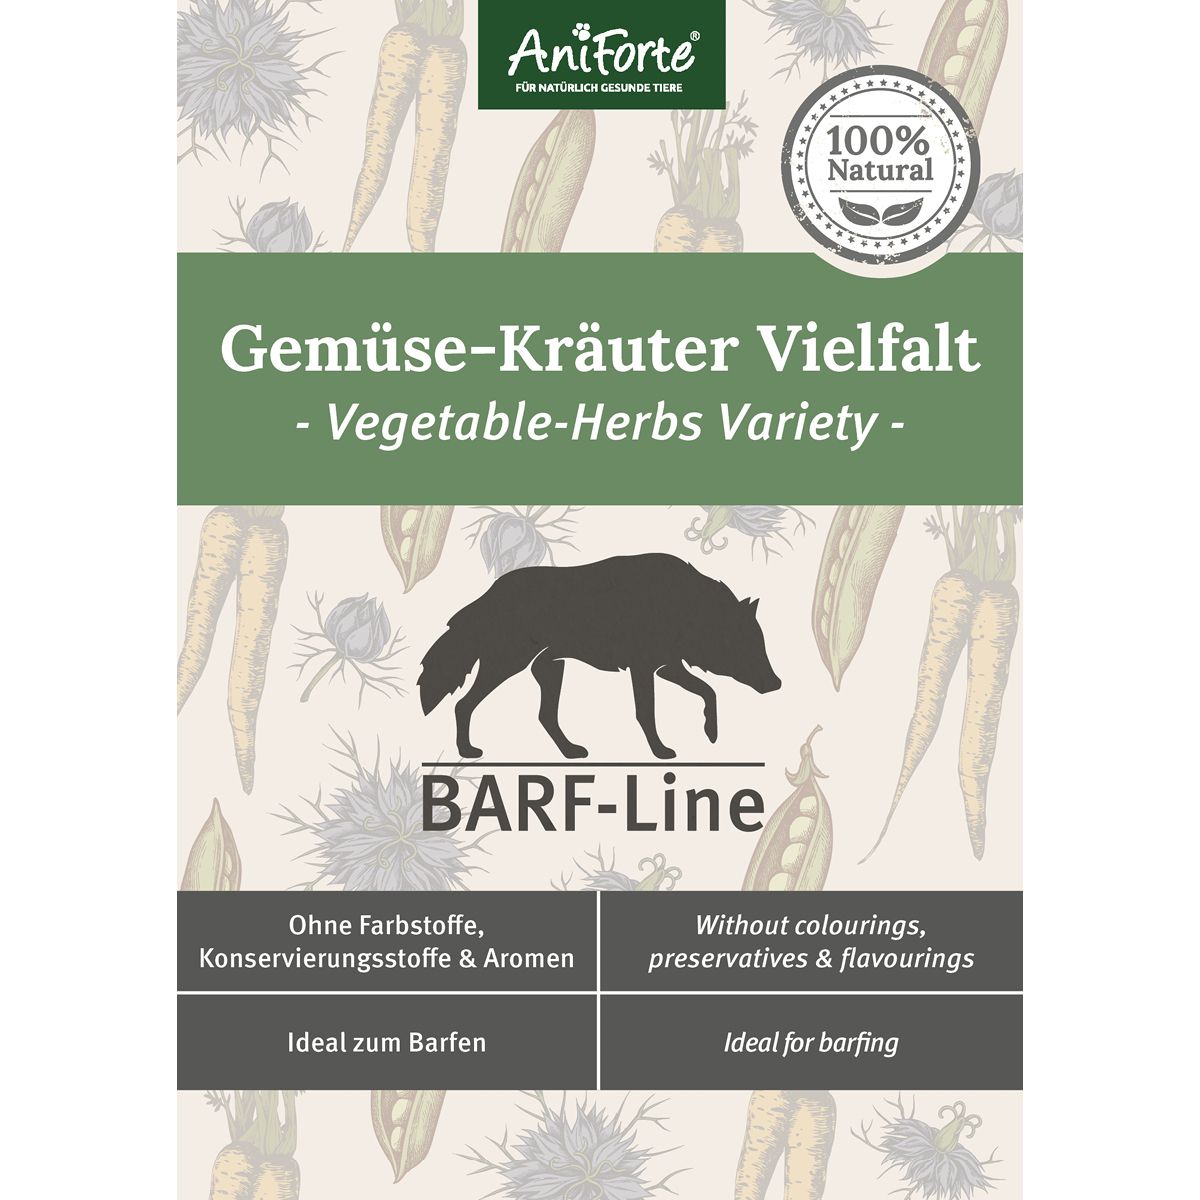 AniForte BARF-Line Gemüse-Kräuter Vielfalt